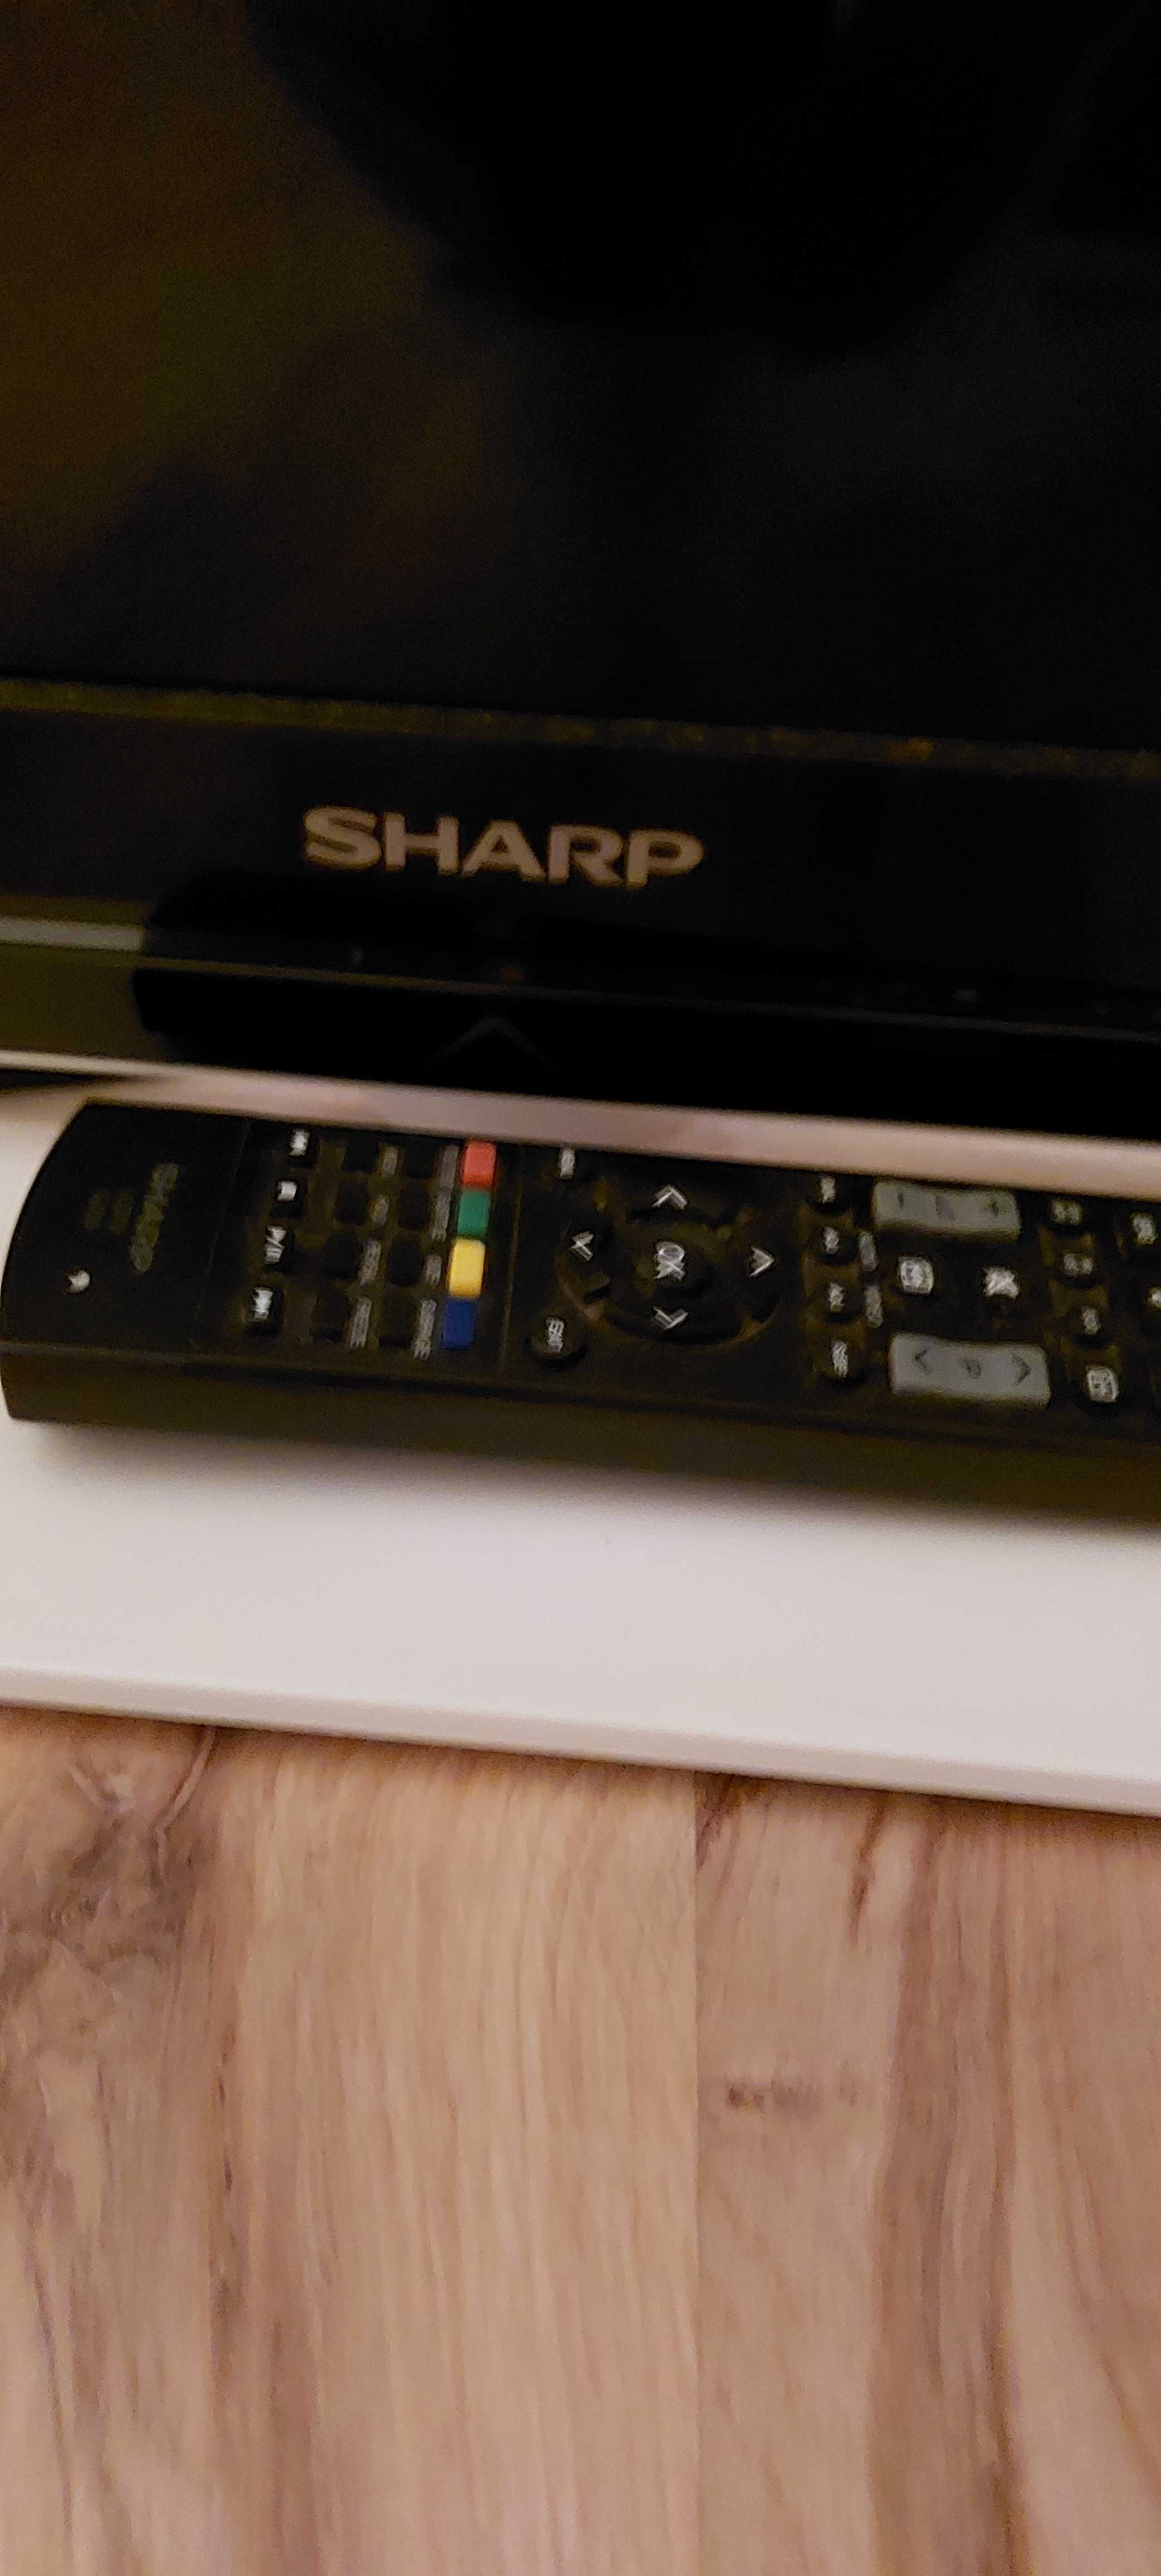 Telewizor Sharp Aquos 26 cali. Nowa niższa cena.